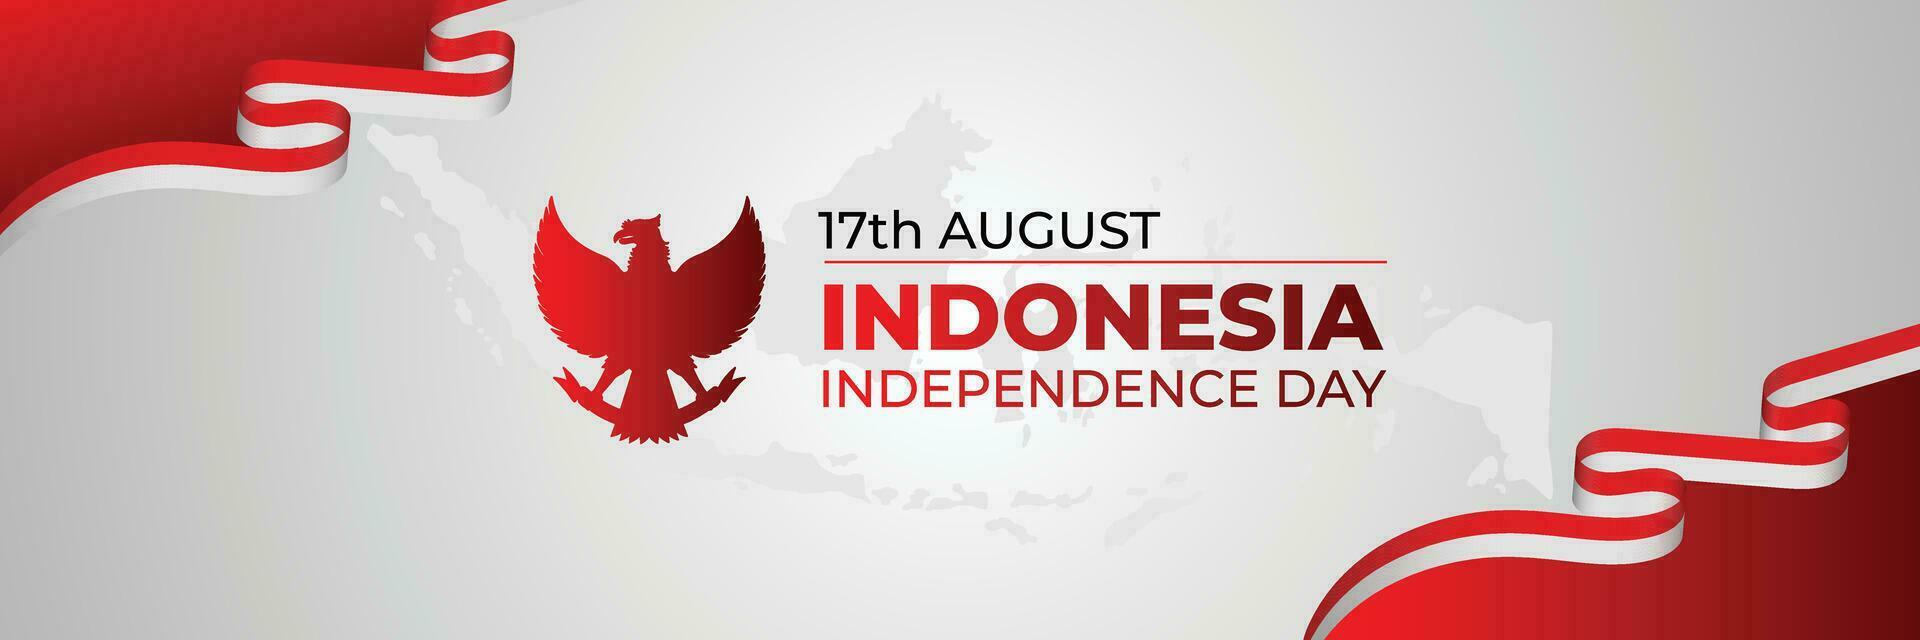 indonesien oberoende dag med vinka flagga vektor